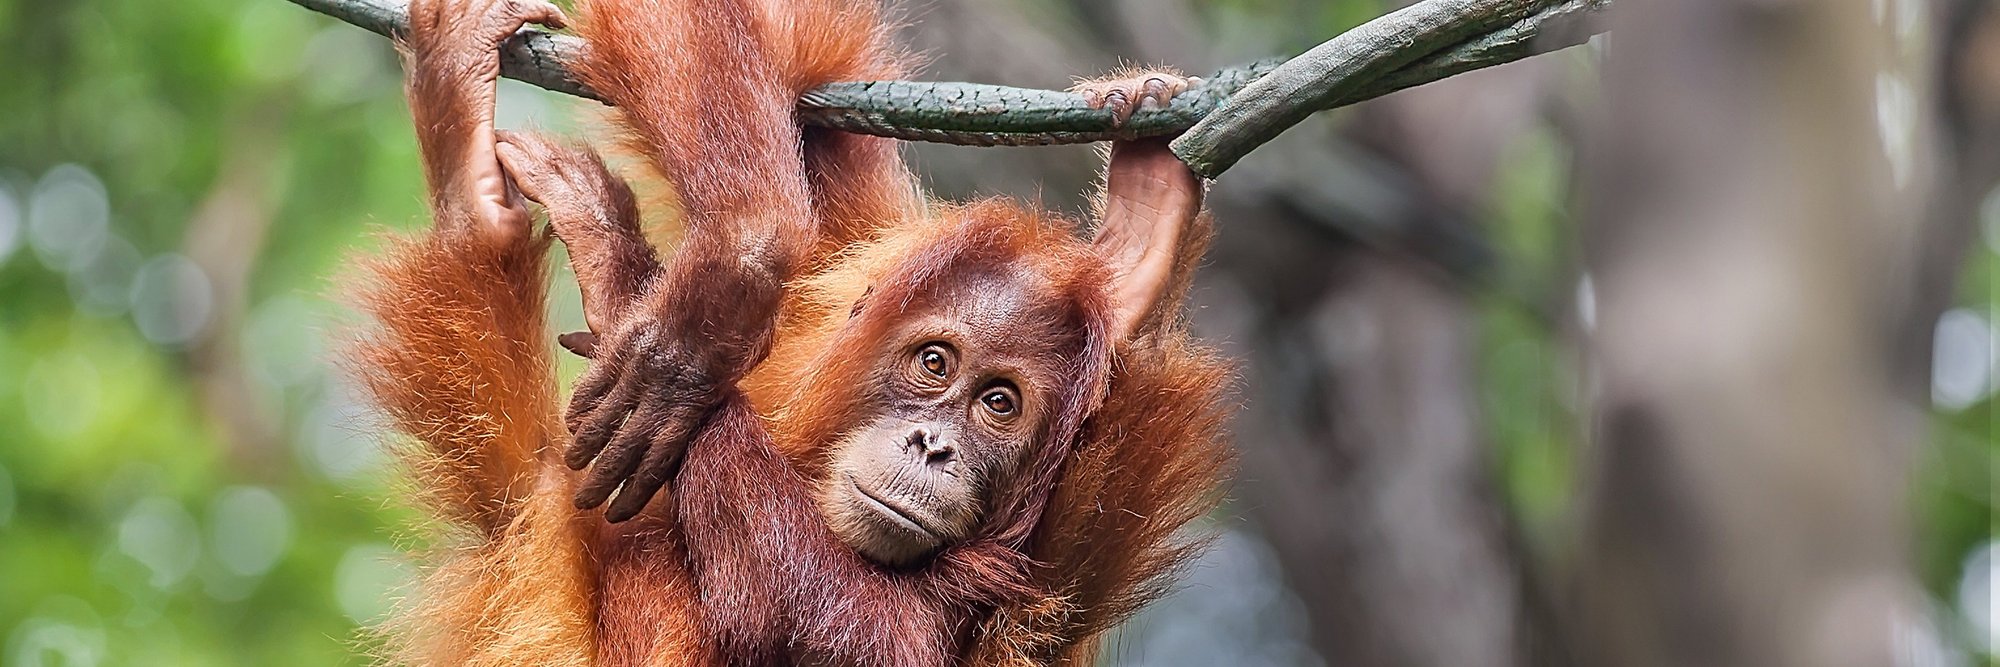 Orangutan weighed with a Höfelmeyer